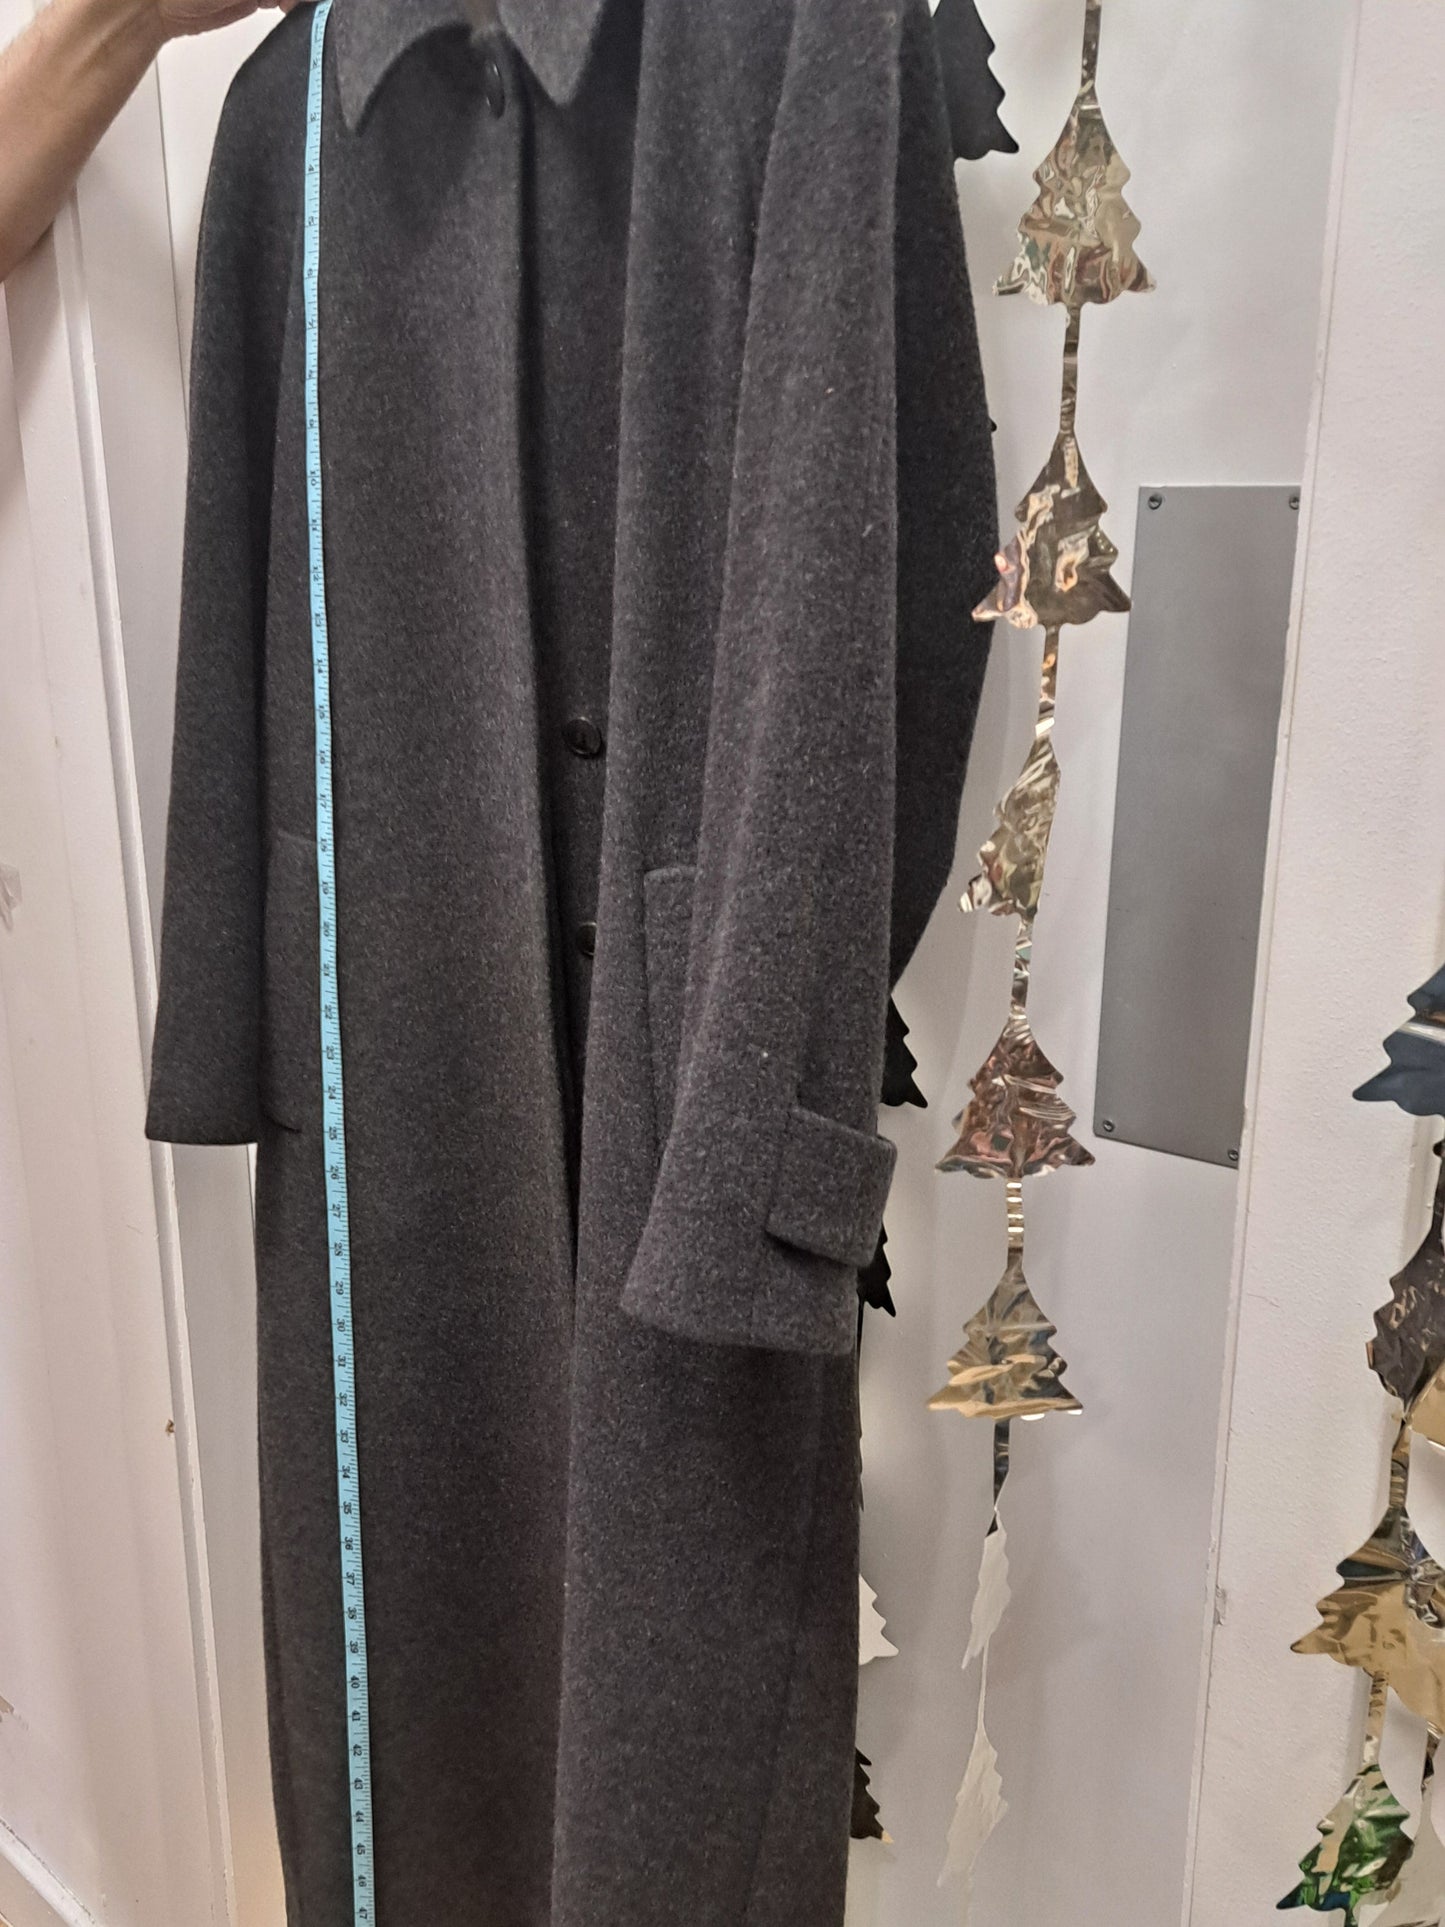 Ladies Grey Wool & Cashmere Coat Size 12 Hobbs